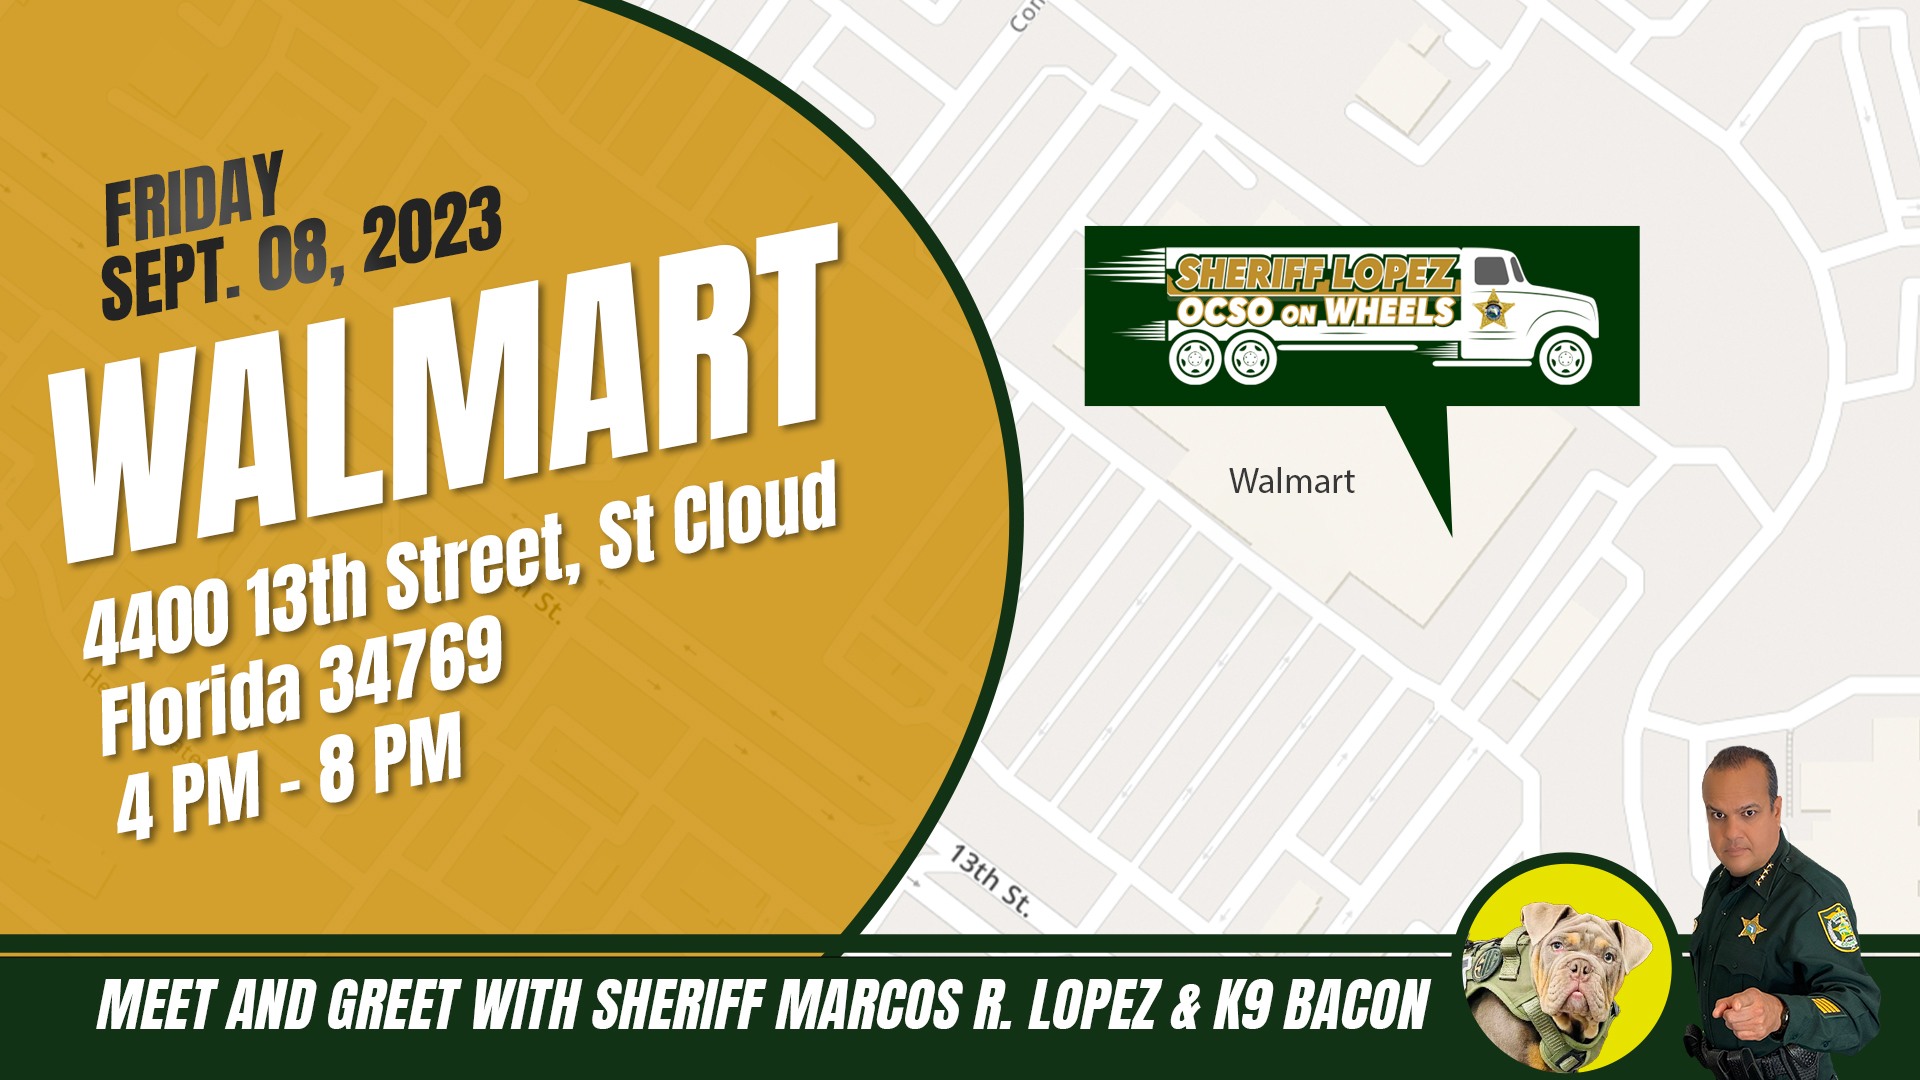 Walmart, 4400 13th Street, St Cloud, Florida 34769